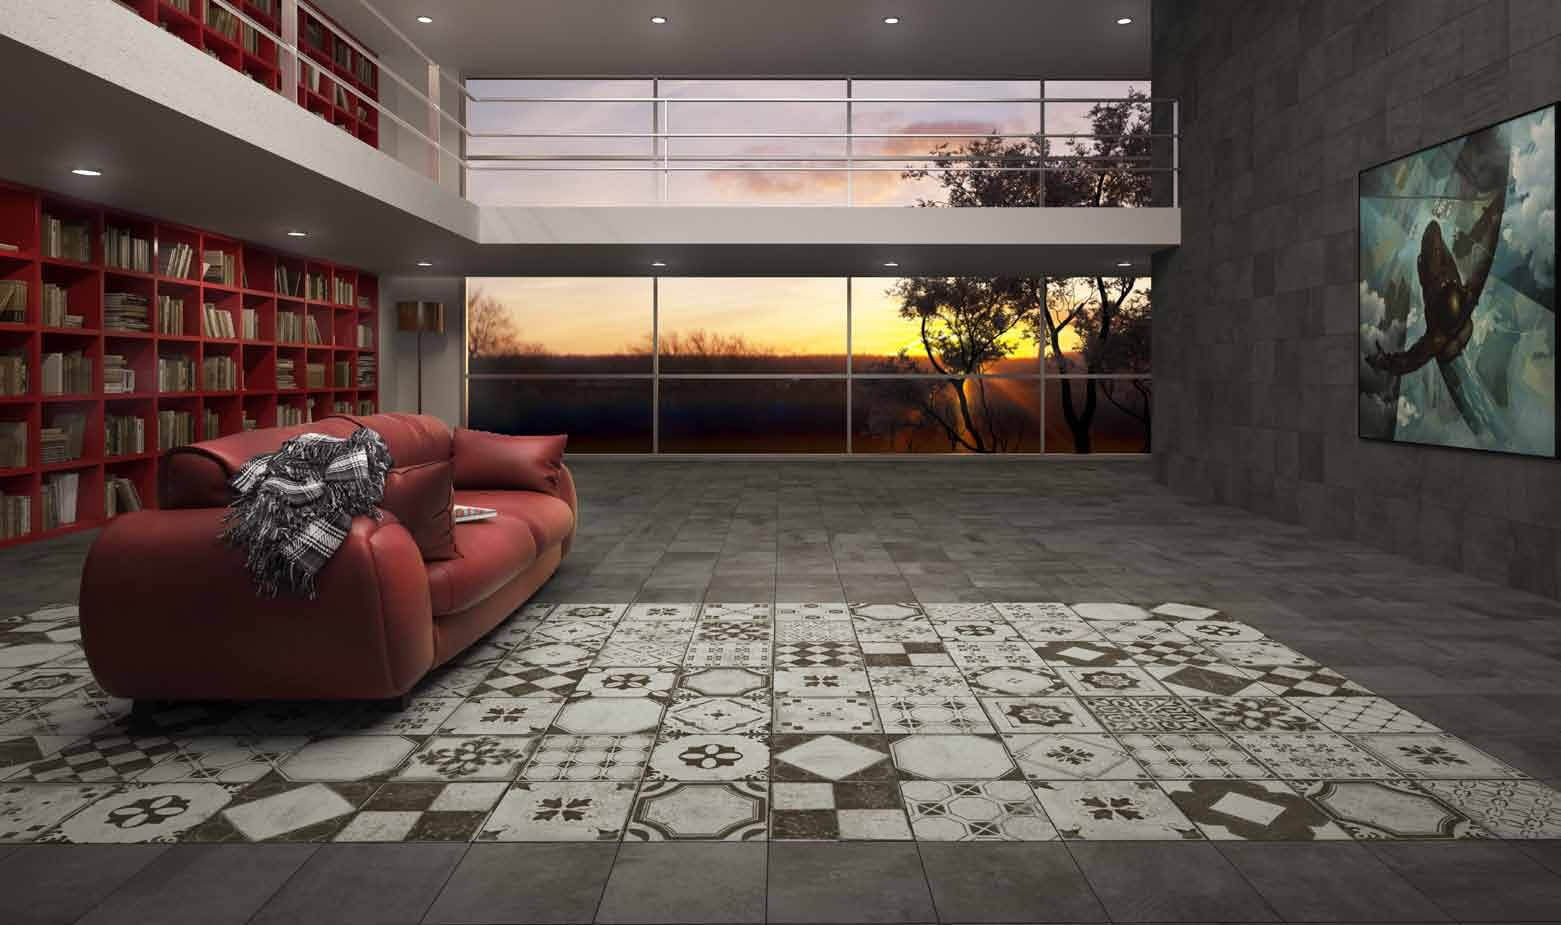 Patterned square tile rug in a living room